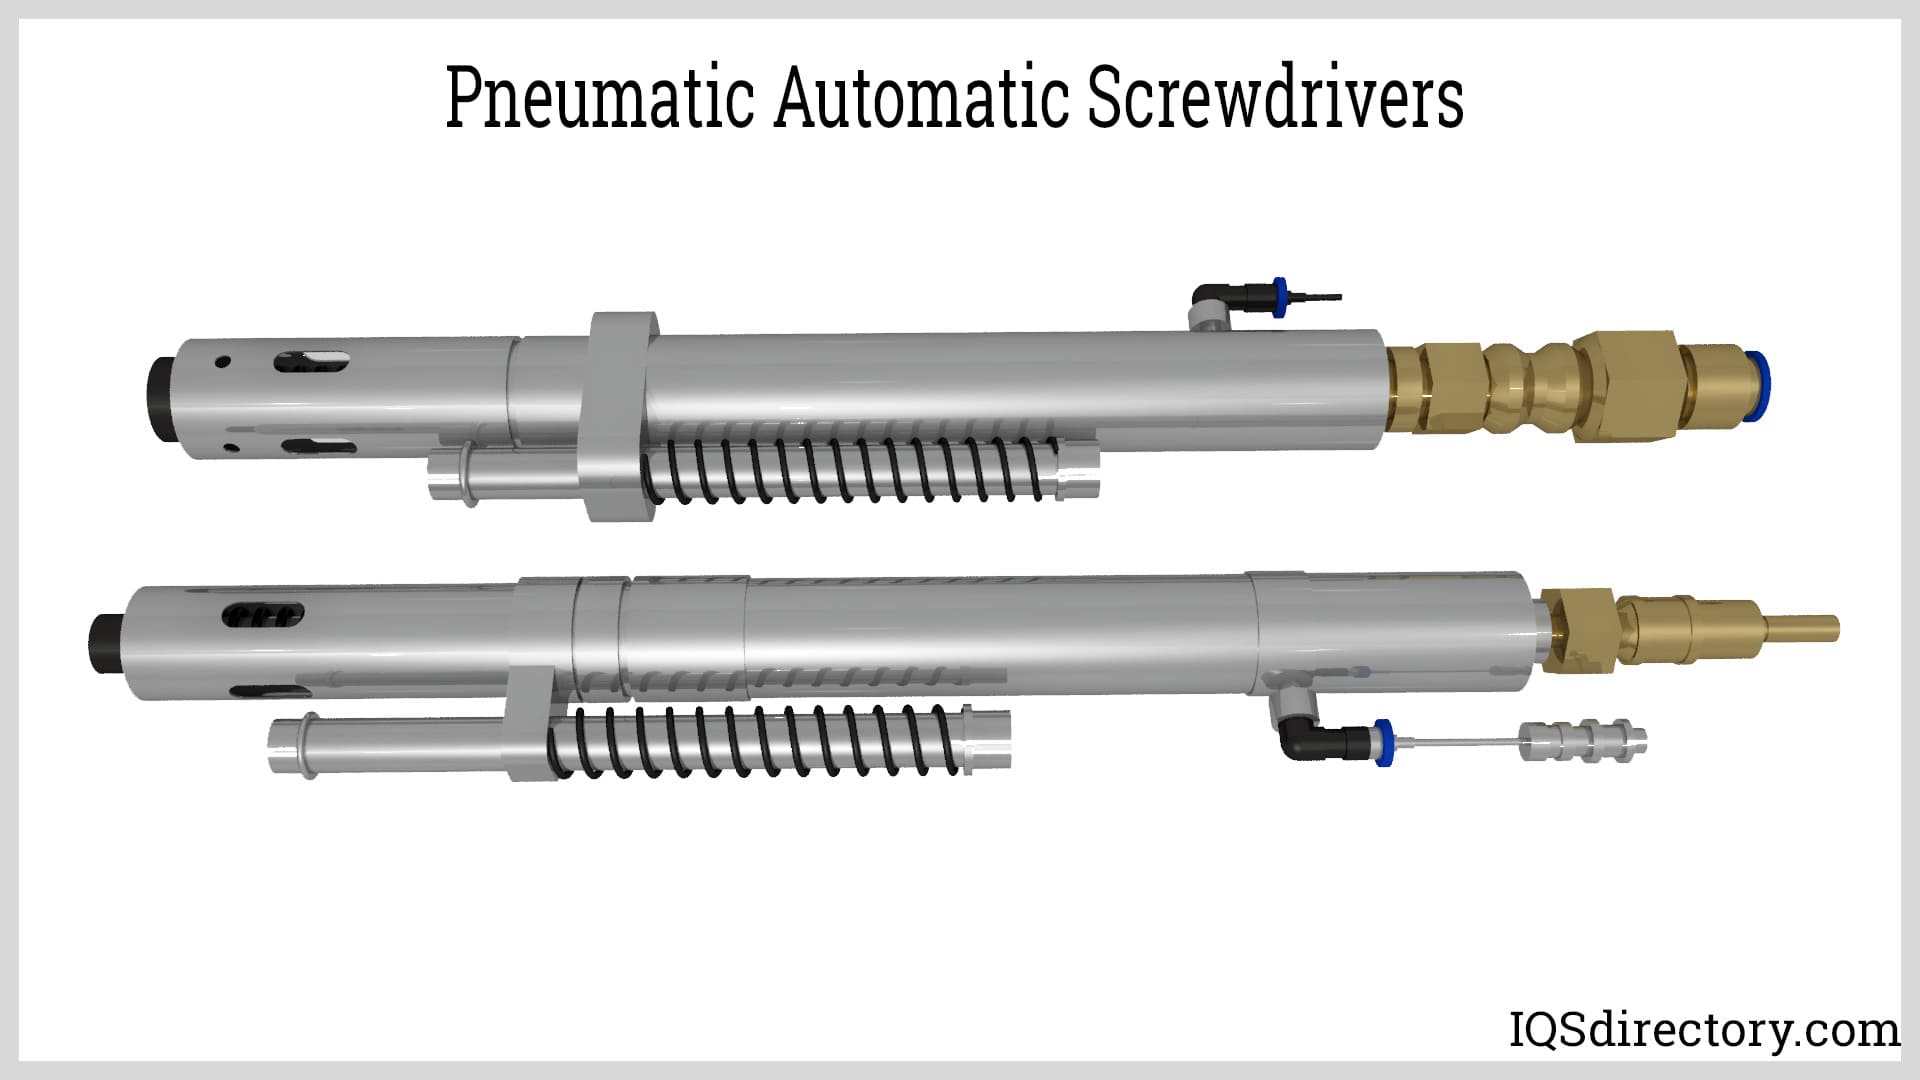 Pneumatic Automatic Screwdrivers